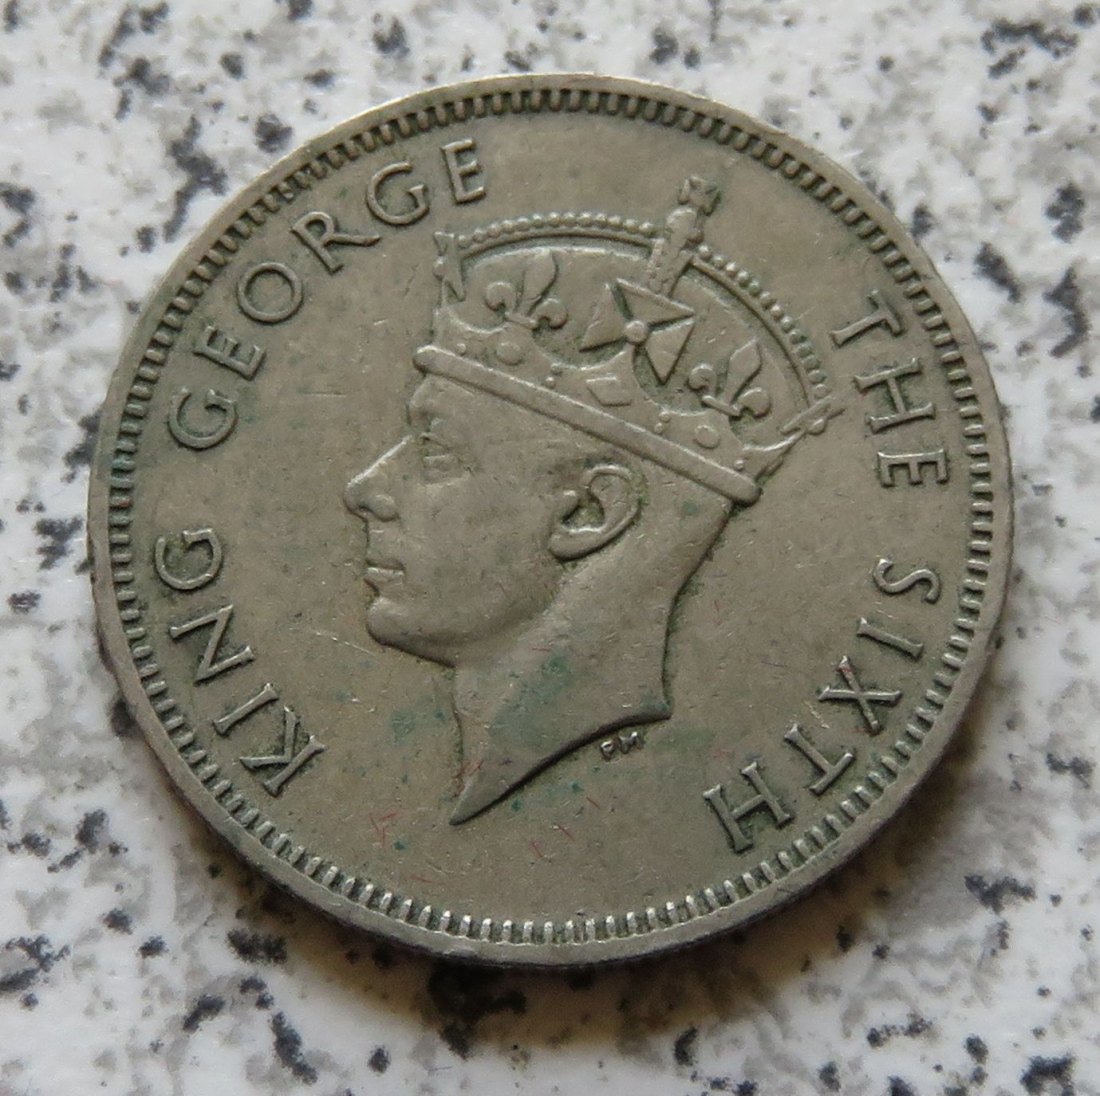  Malaya 20 Cents 1948   